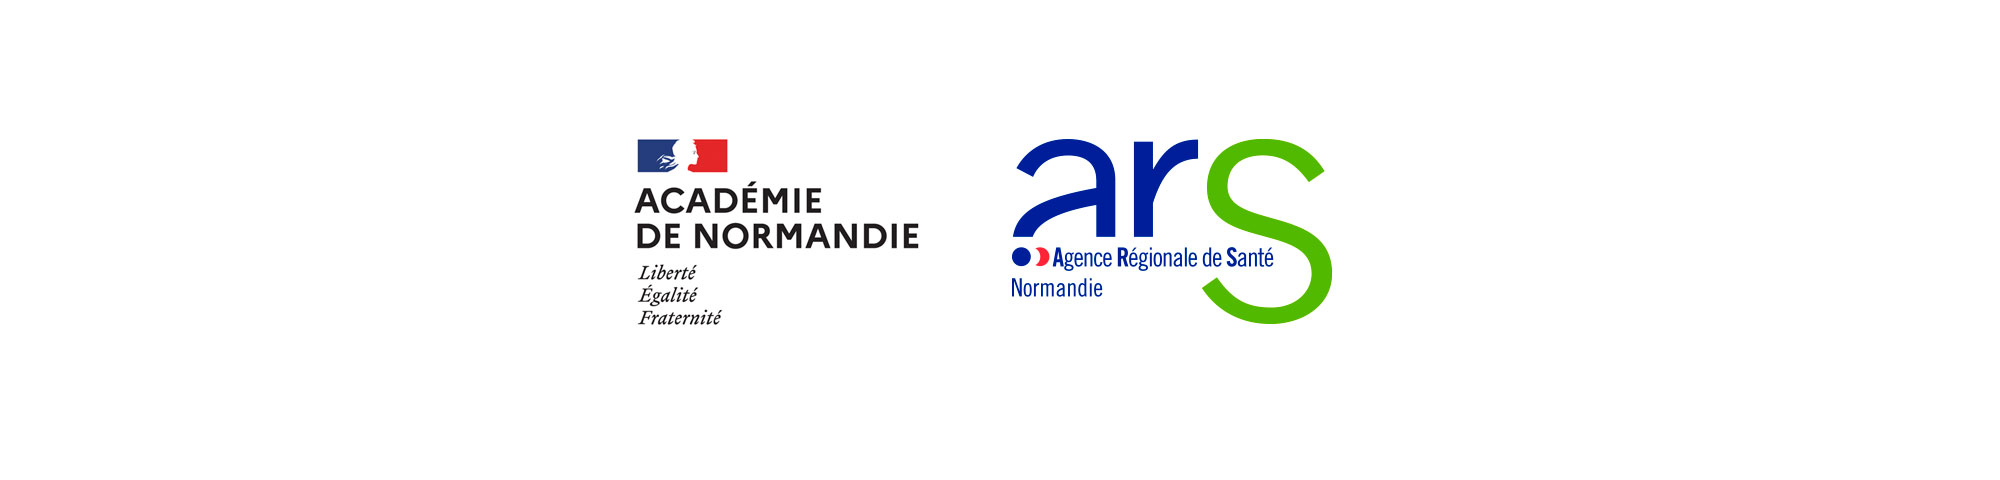 logos ARS Normandie Academie de Normandie